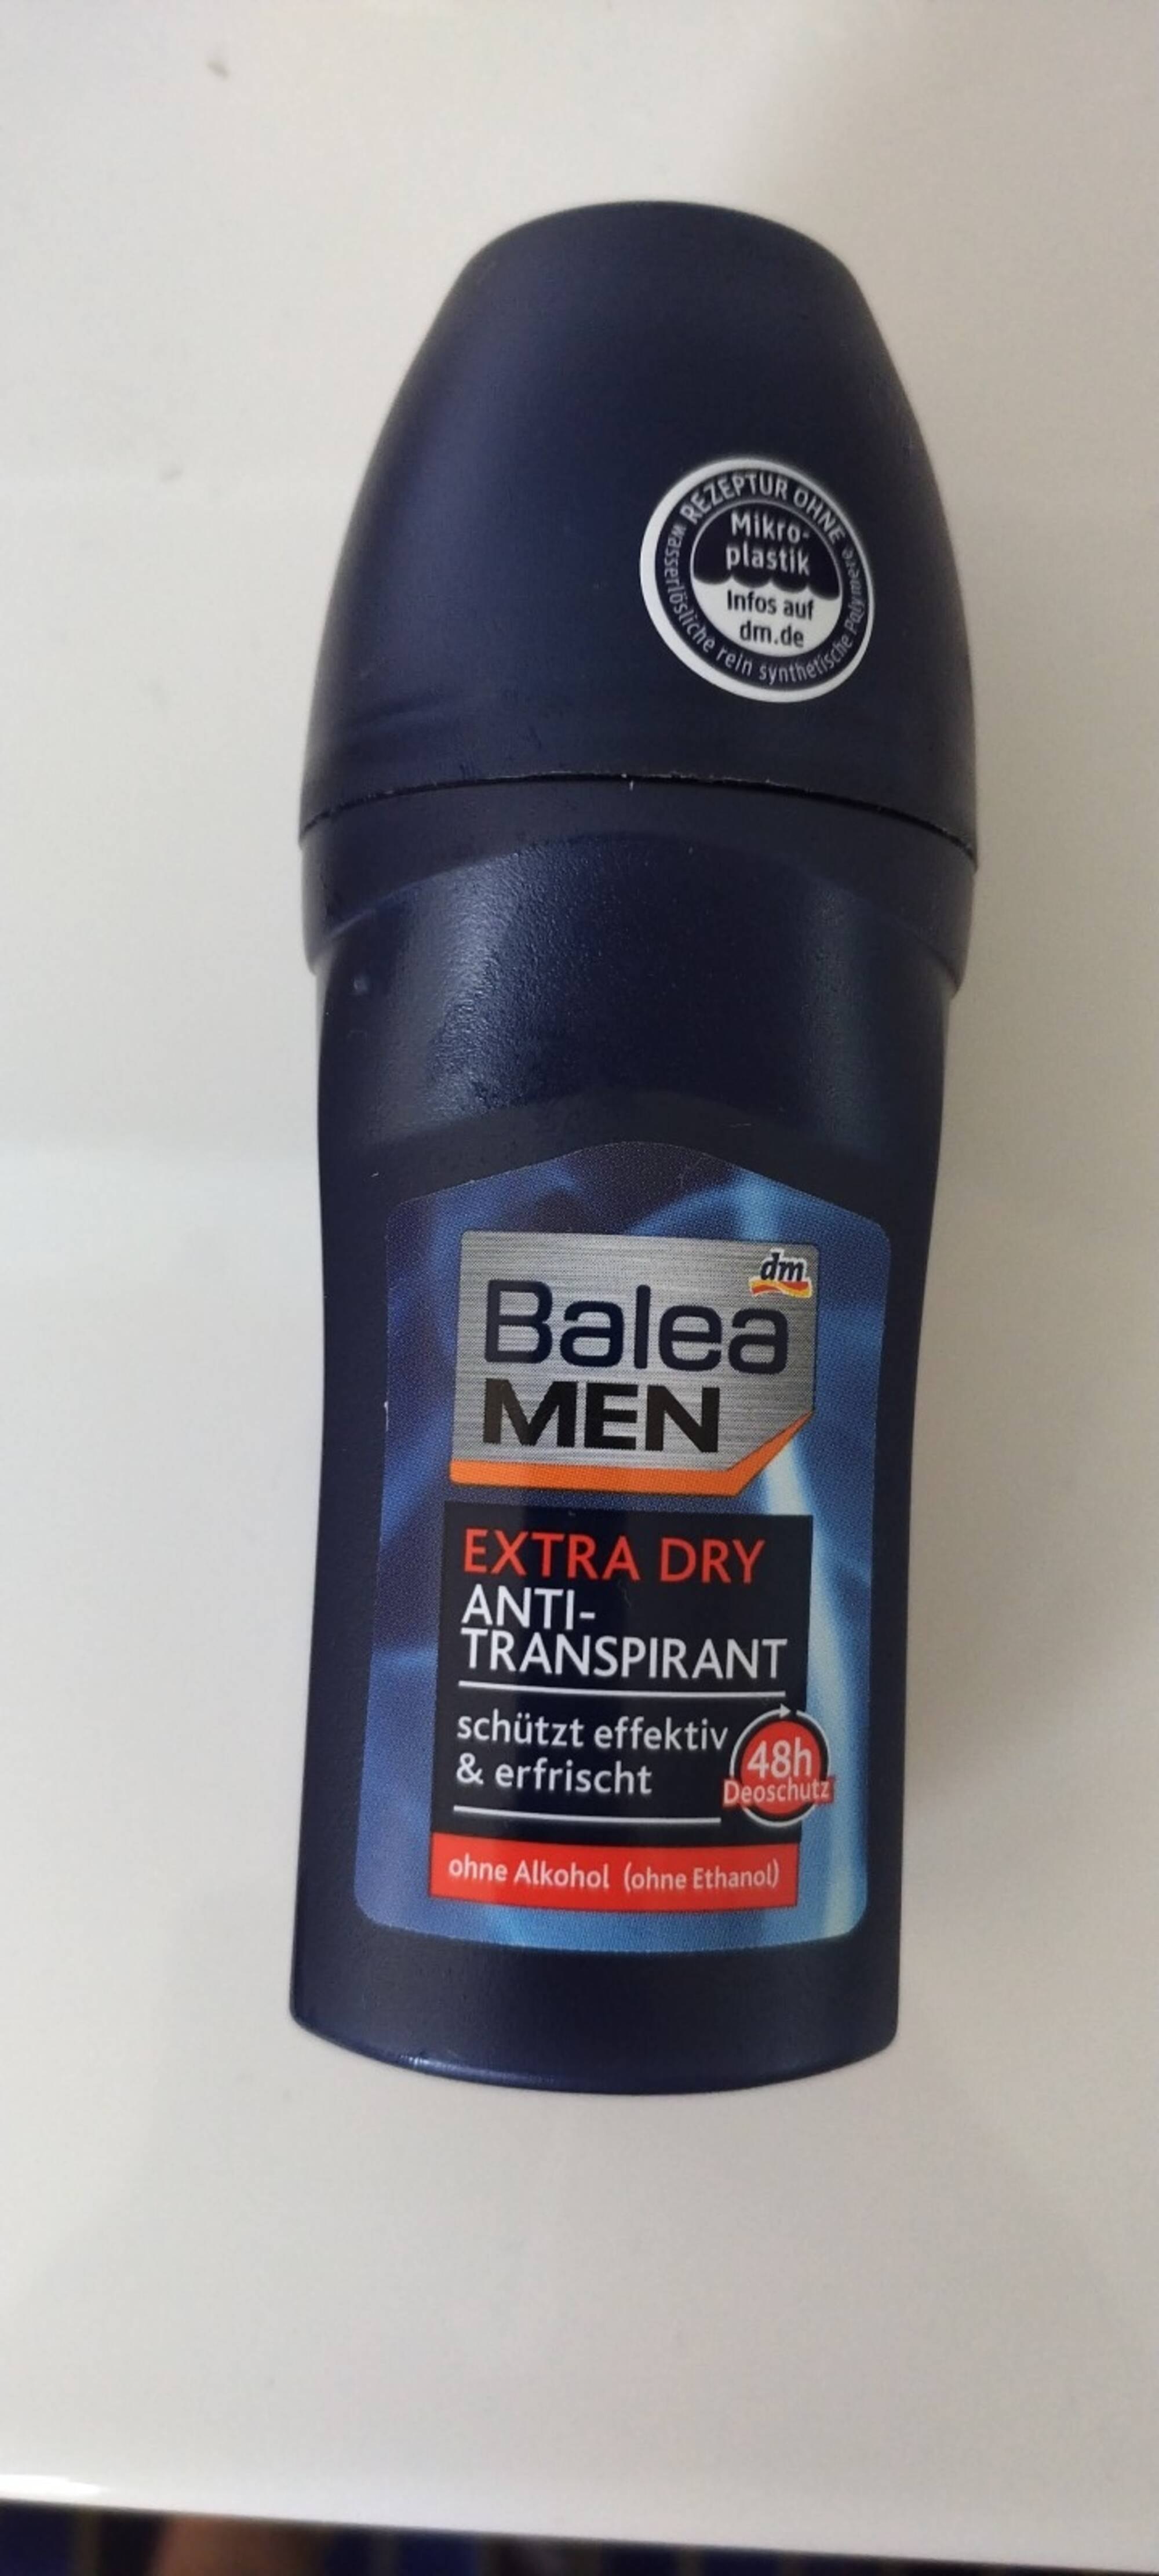 BALEA MEN - Extra dry - Anti-transpirant